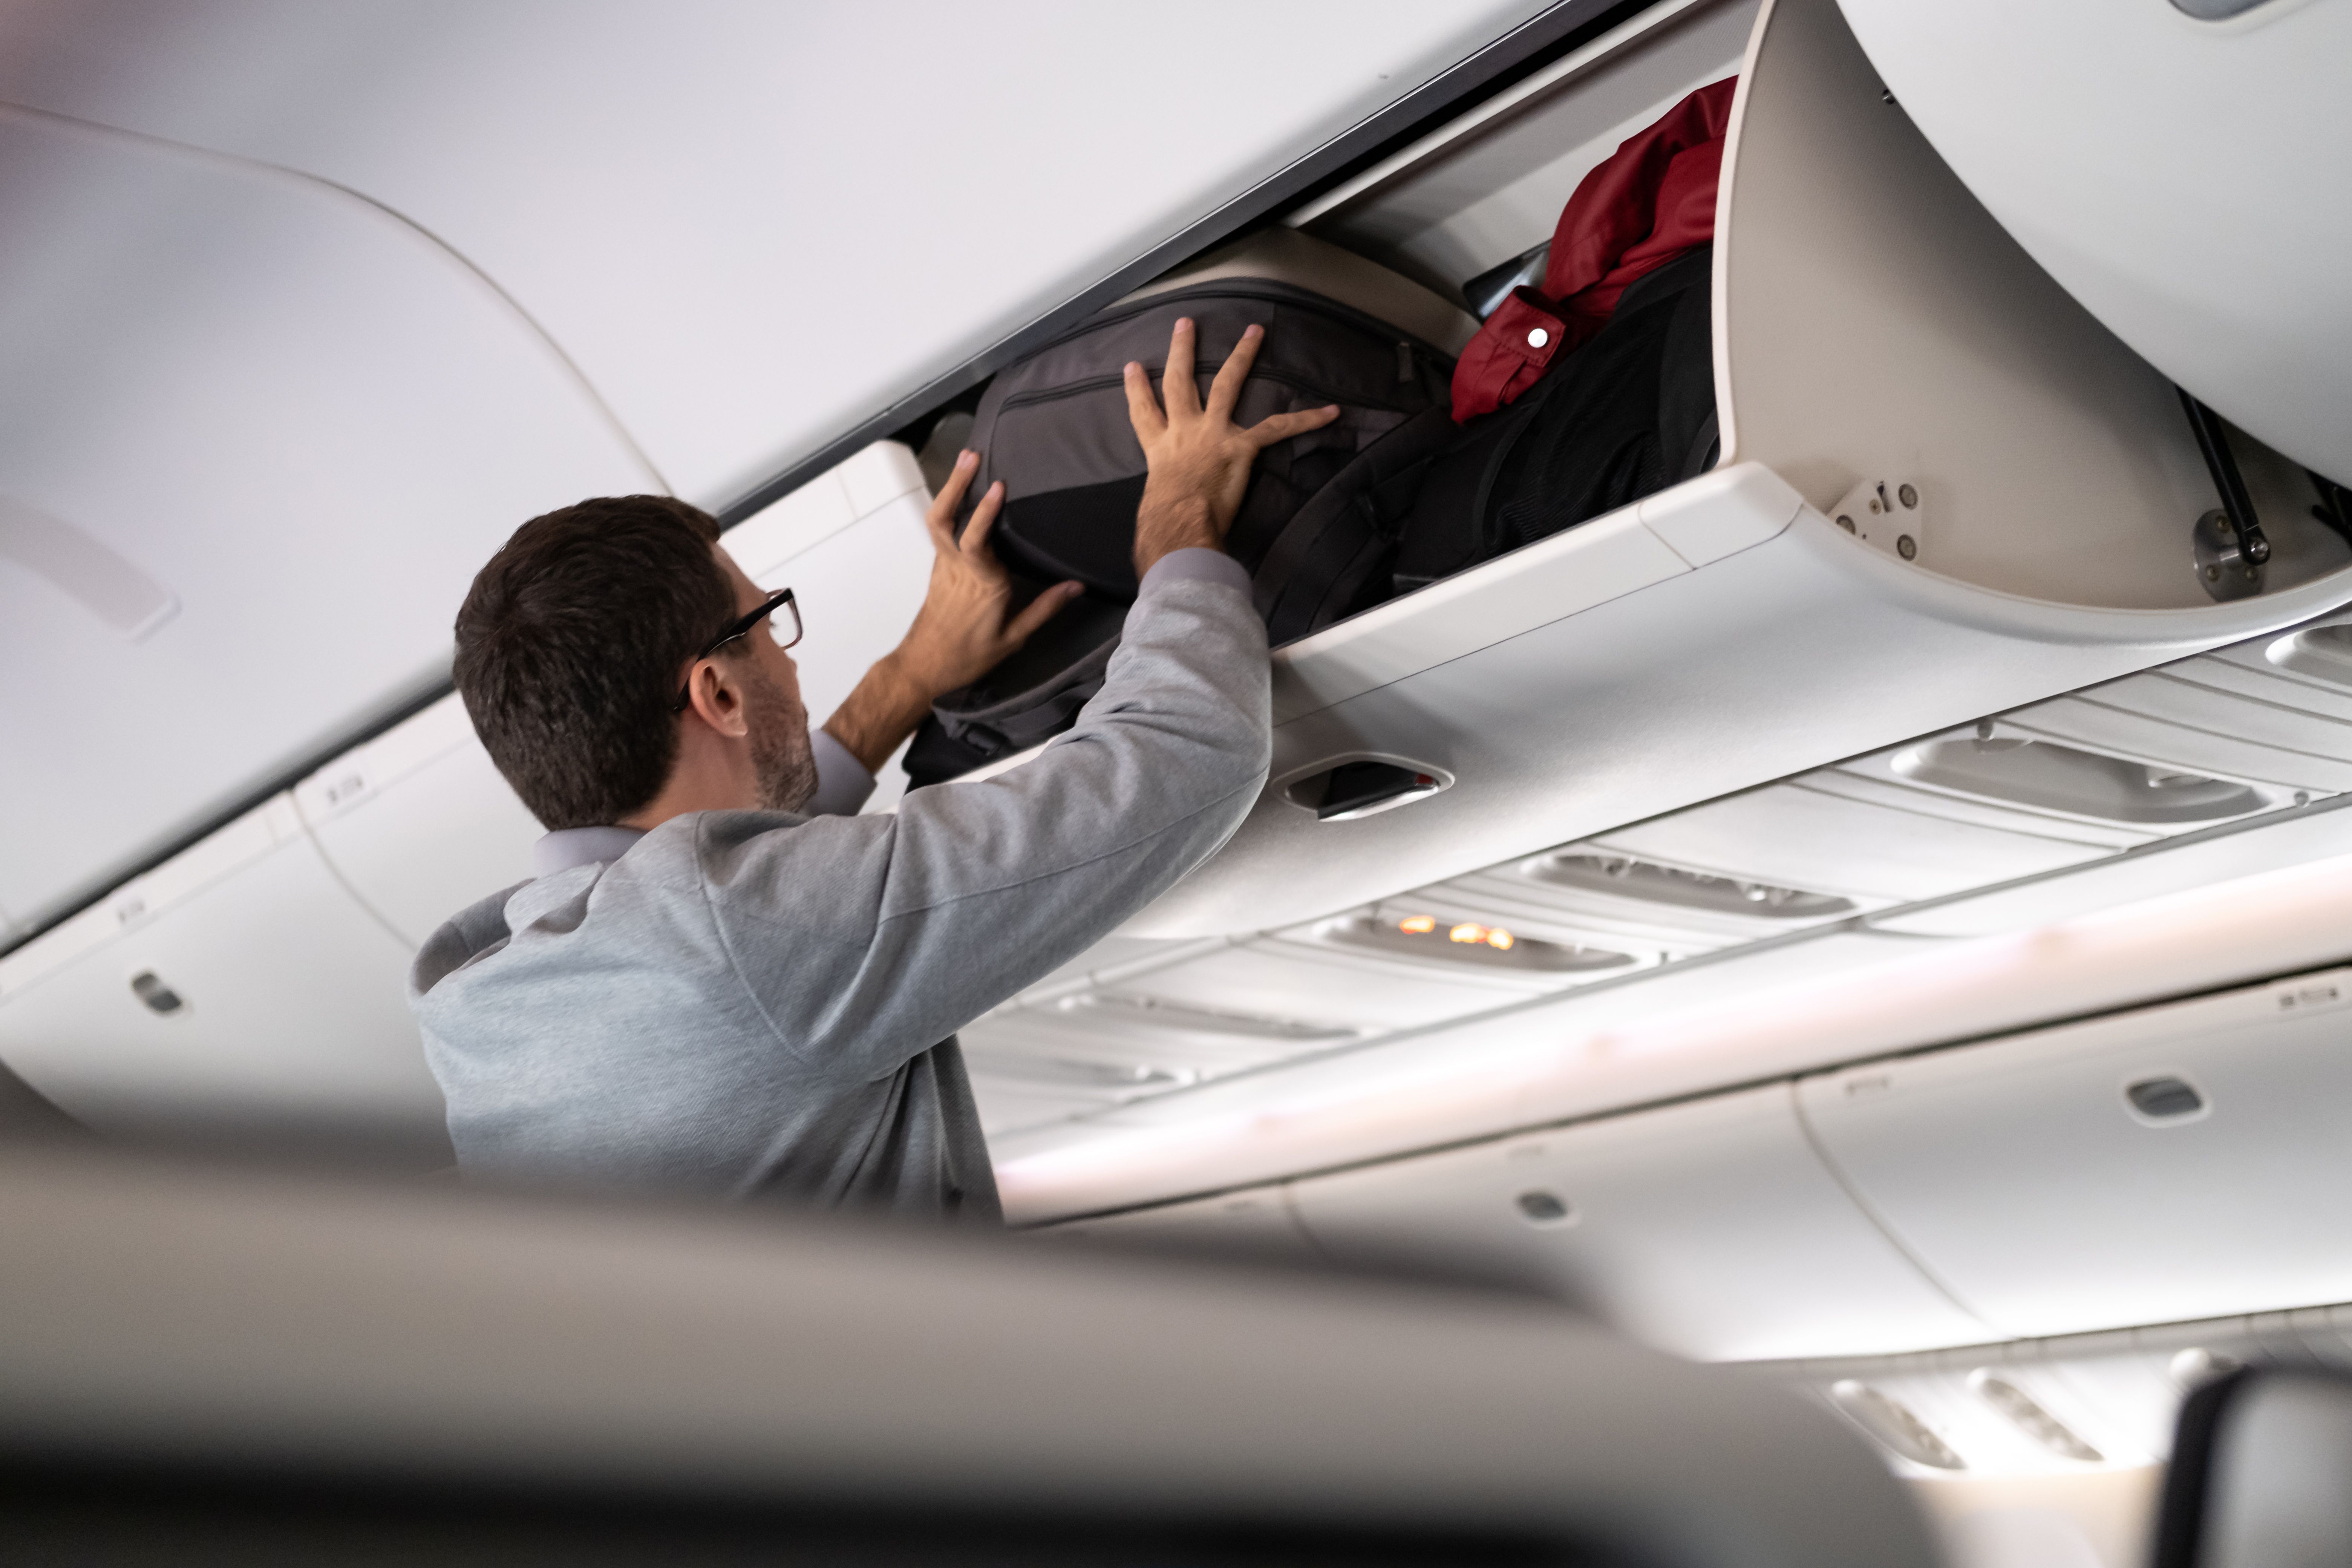 A man forces a bag into a full overhead bin on an aircraft.